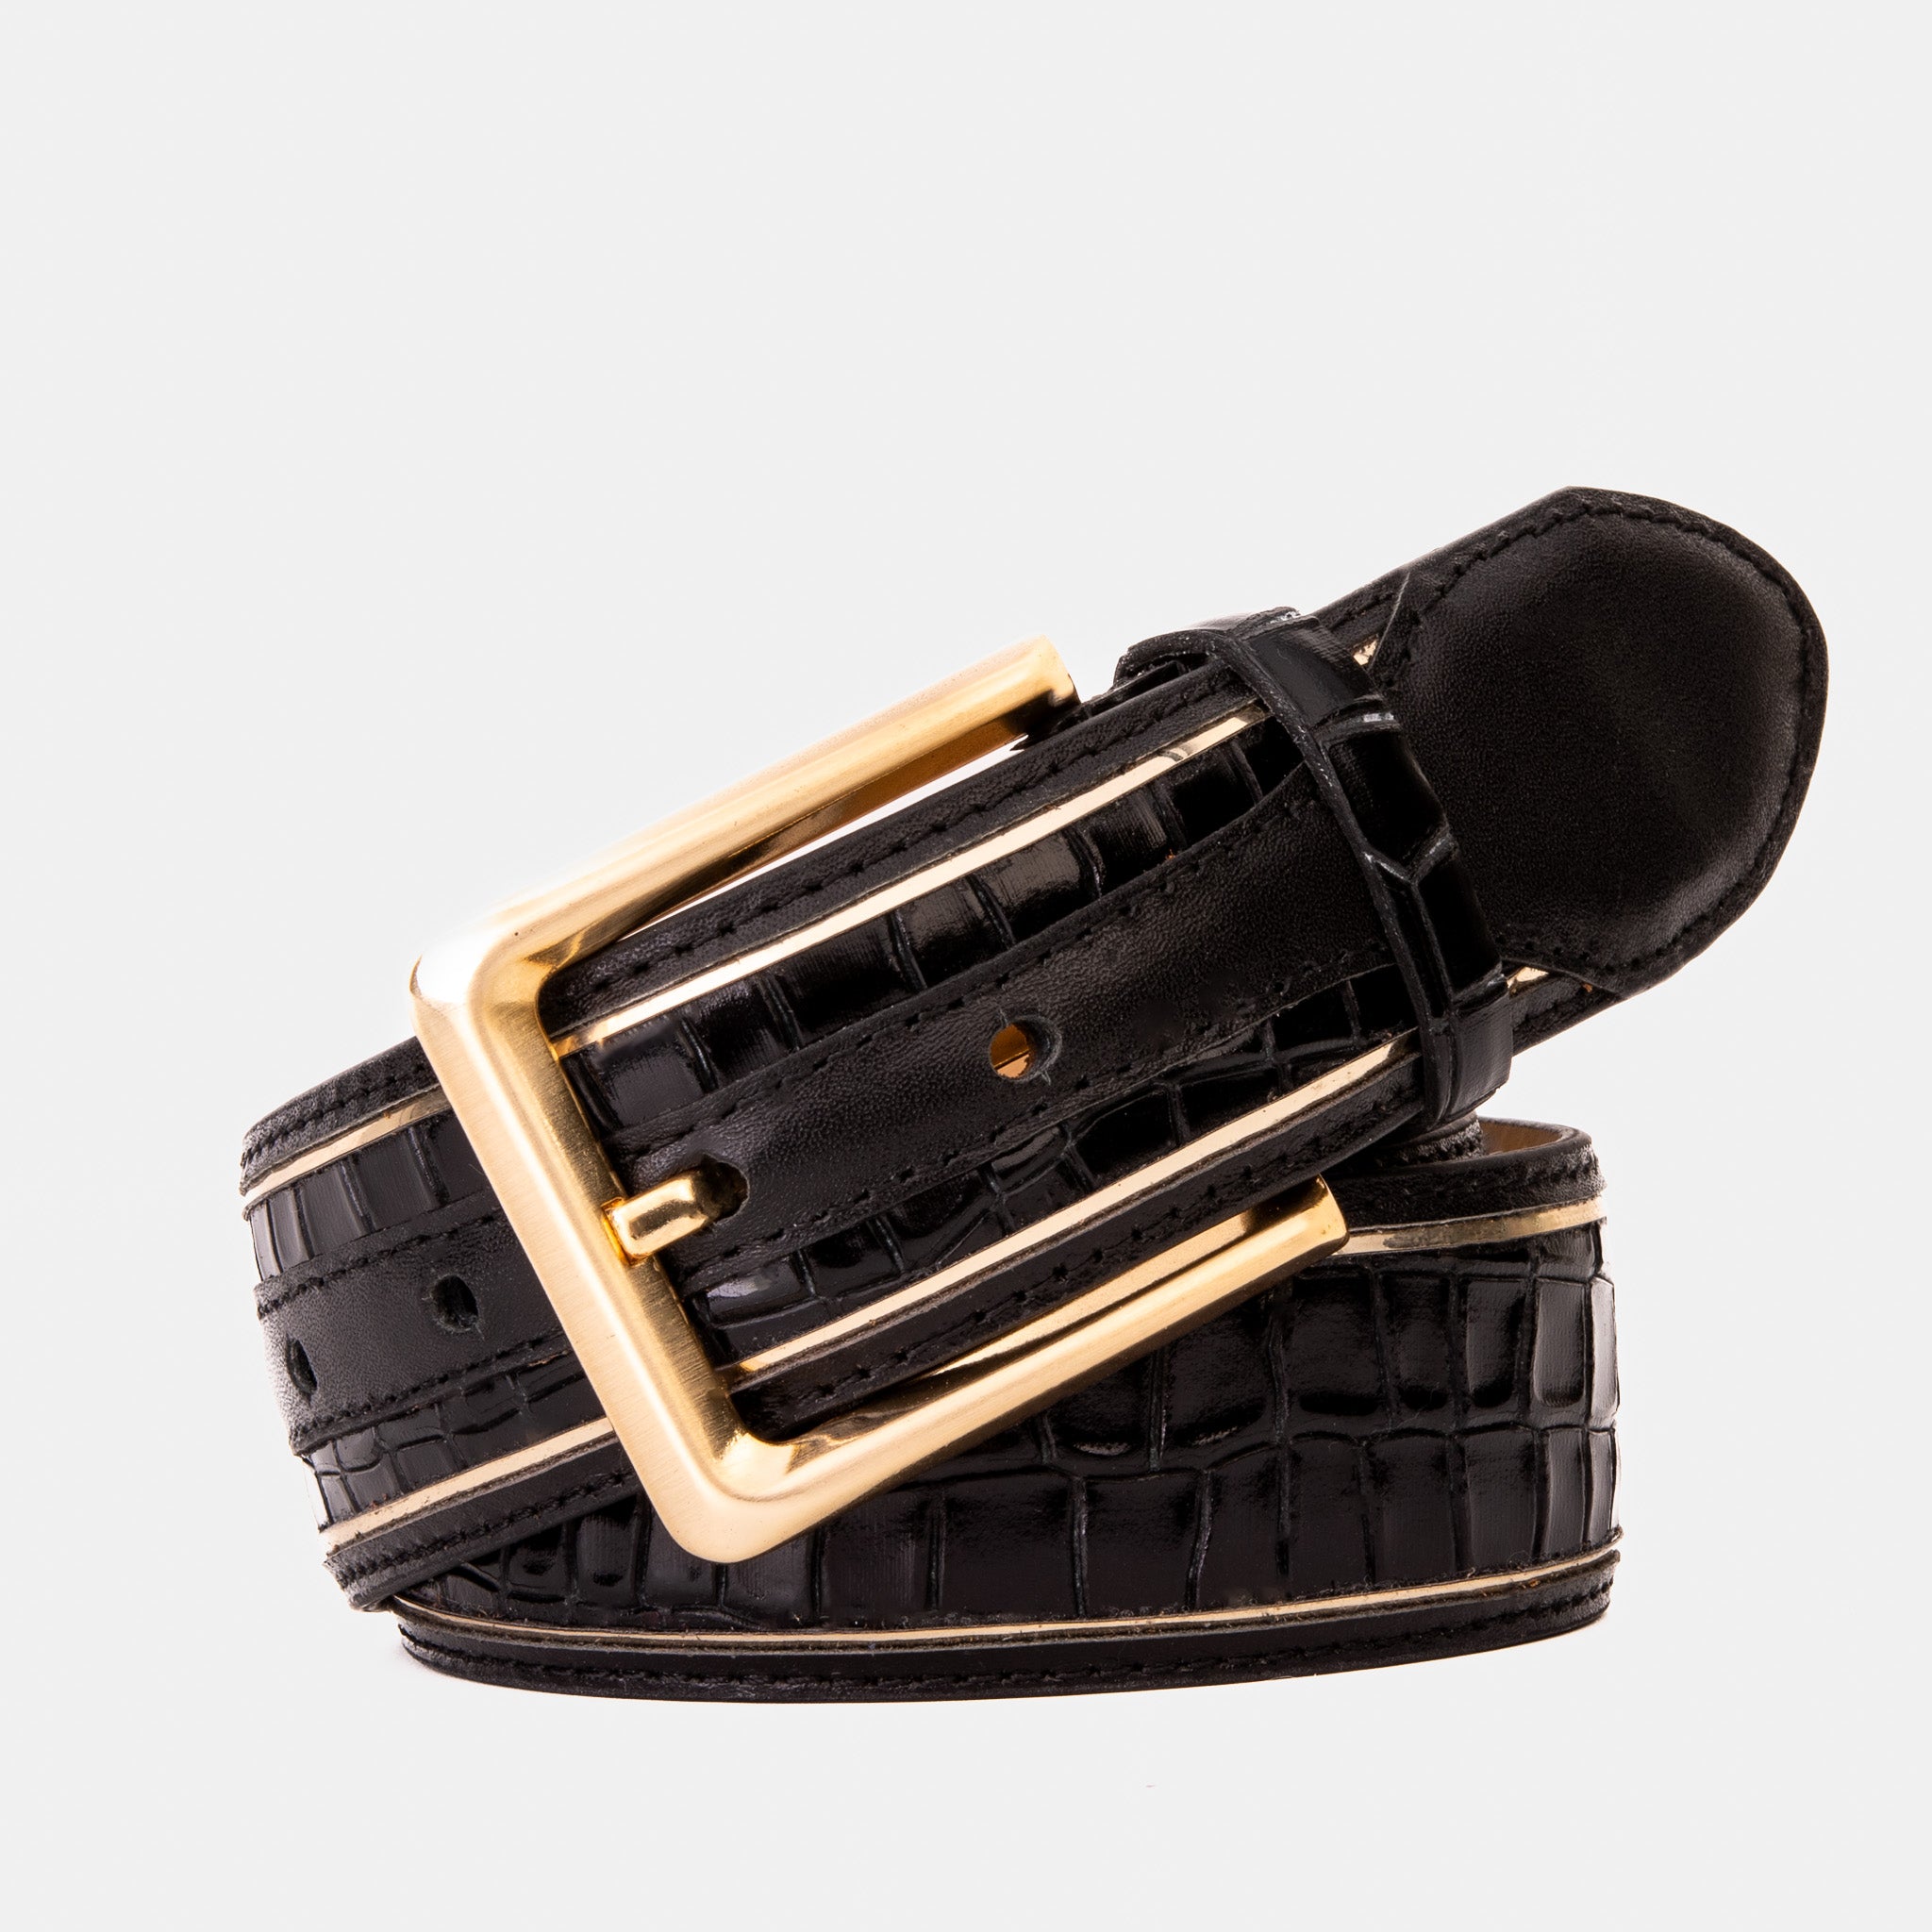 The Bellagio Black & Gold Leather Belt